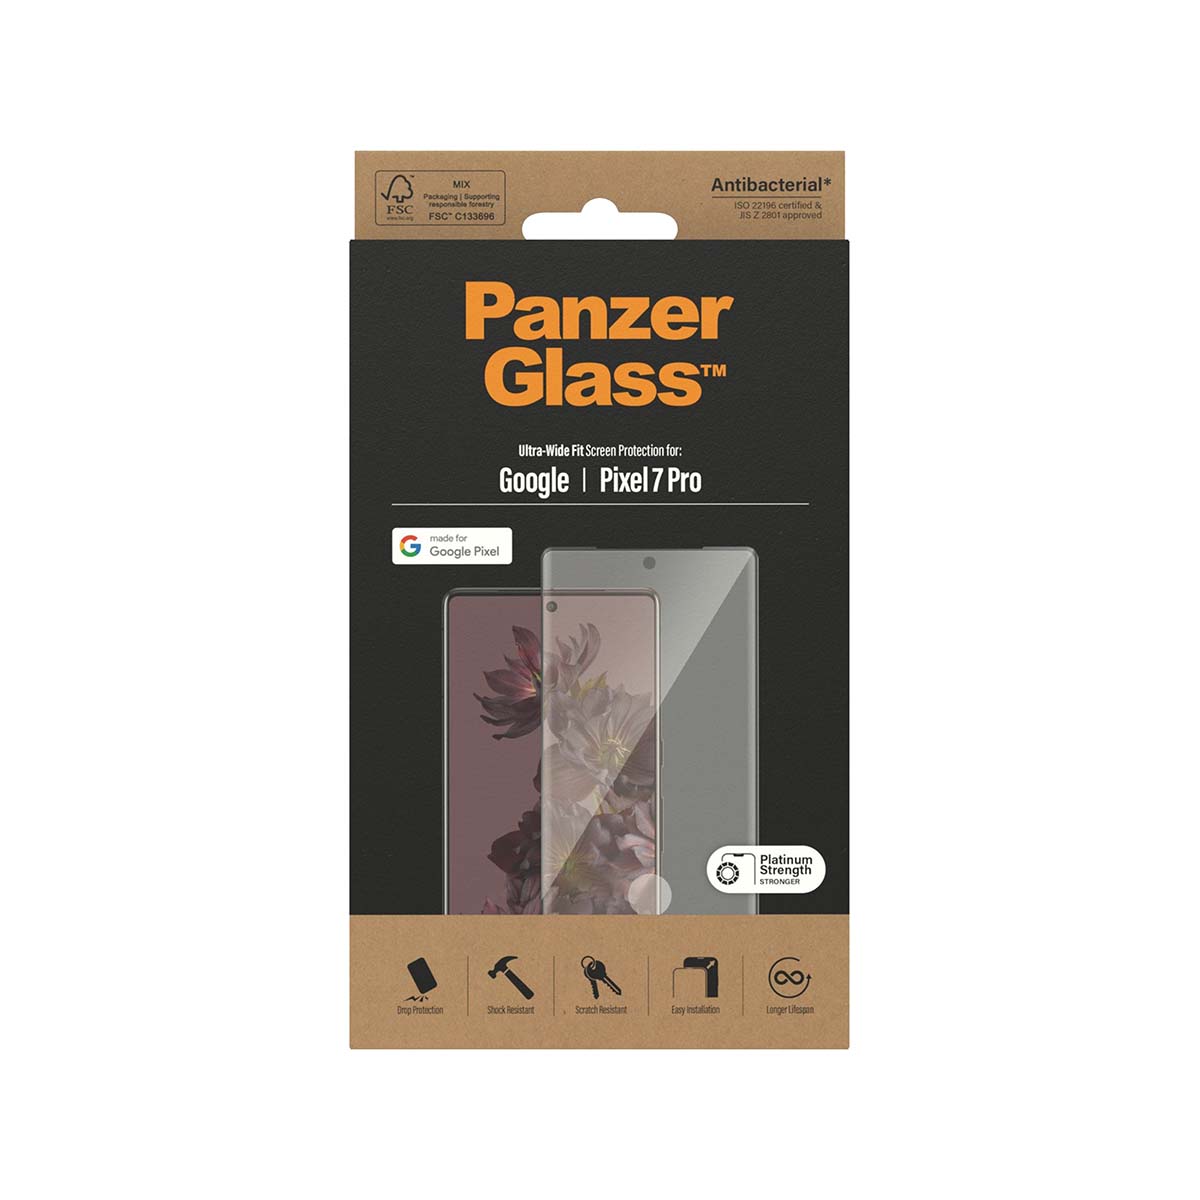 PanzerGlass Utra-Wide Fit Antibacterial Screen Protector for Google Pixel 7 Pro